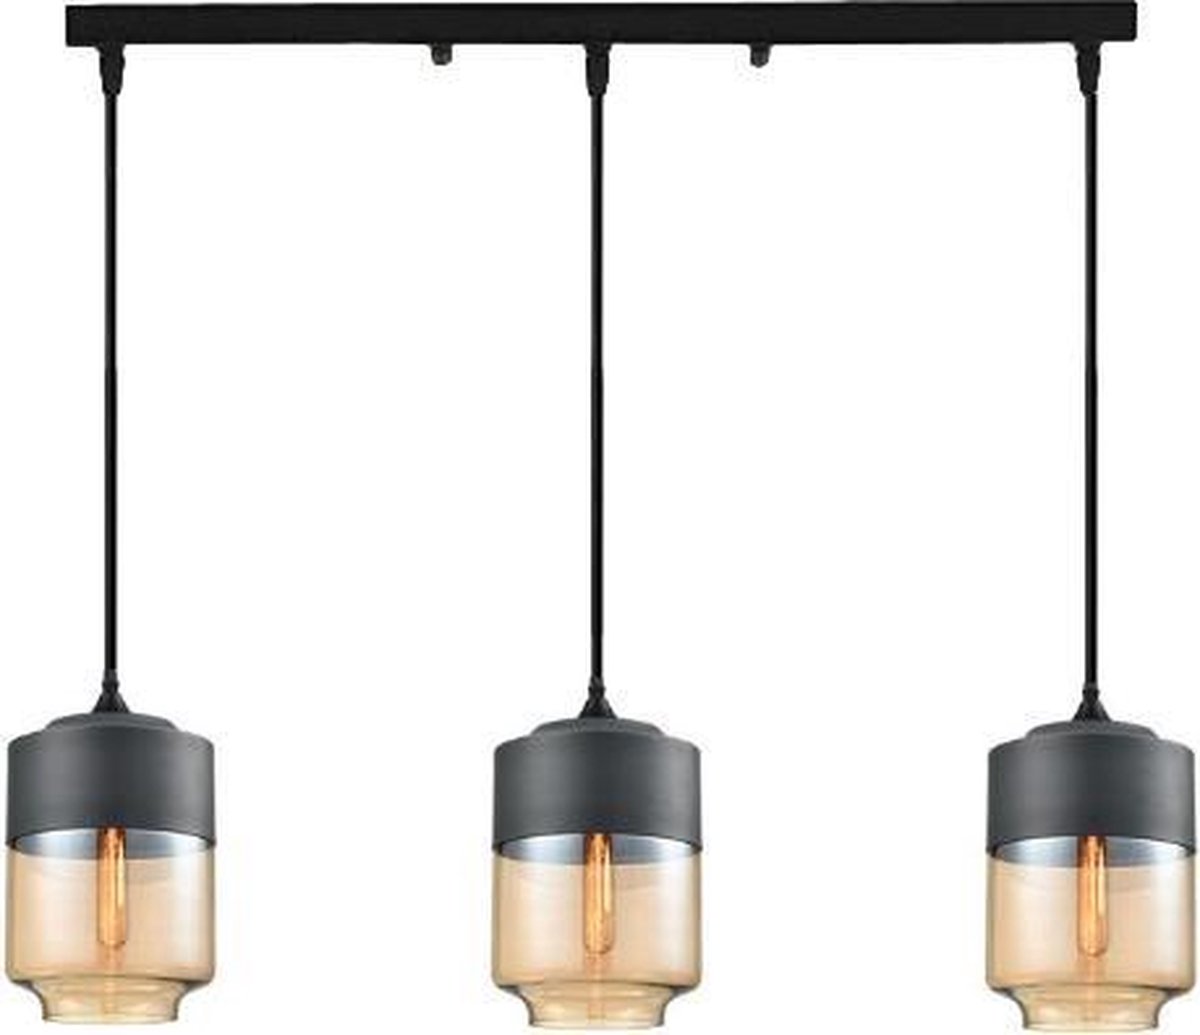 Meeuse-Led - Hanglamp - Set - 3 stuks - Hoogte 31 cm - Breedte 18 cm - Hanglampen Eetkamer - Woonkamer - Hanglamp Zwart - Hanglamp Glas - Hanglamp Modern - Draadlampen - E27 - Cilinder